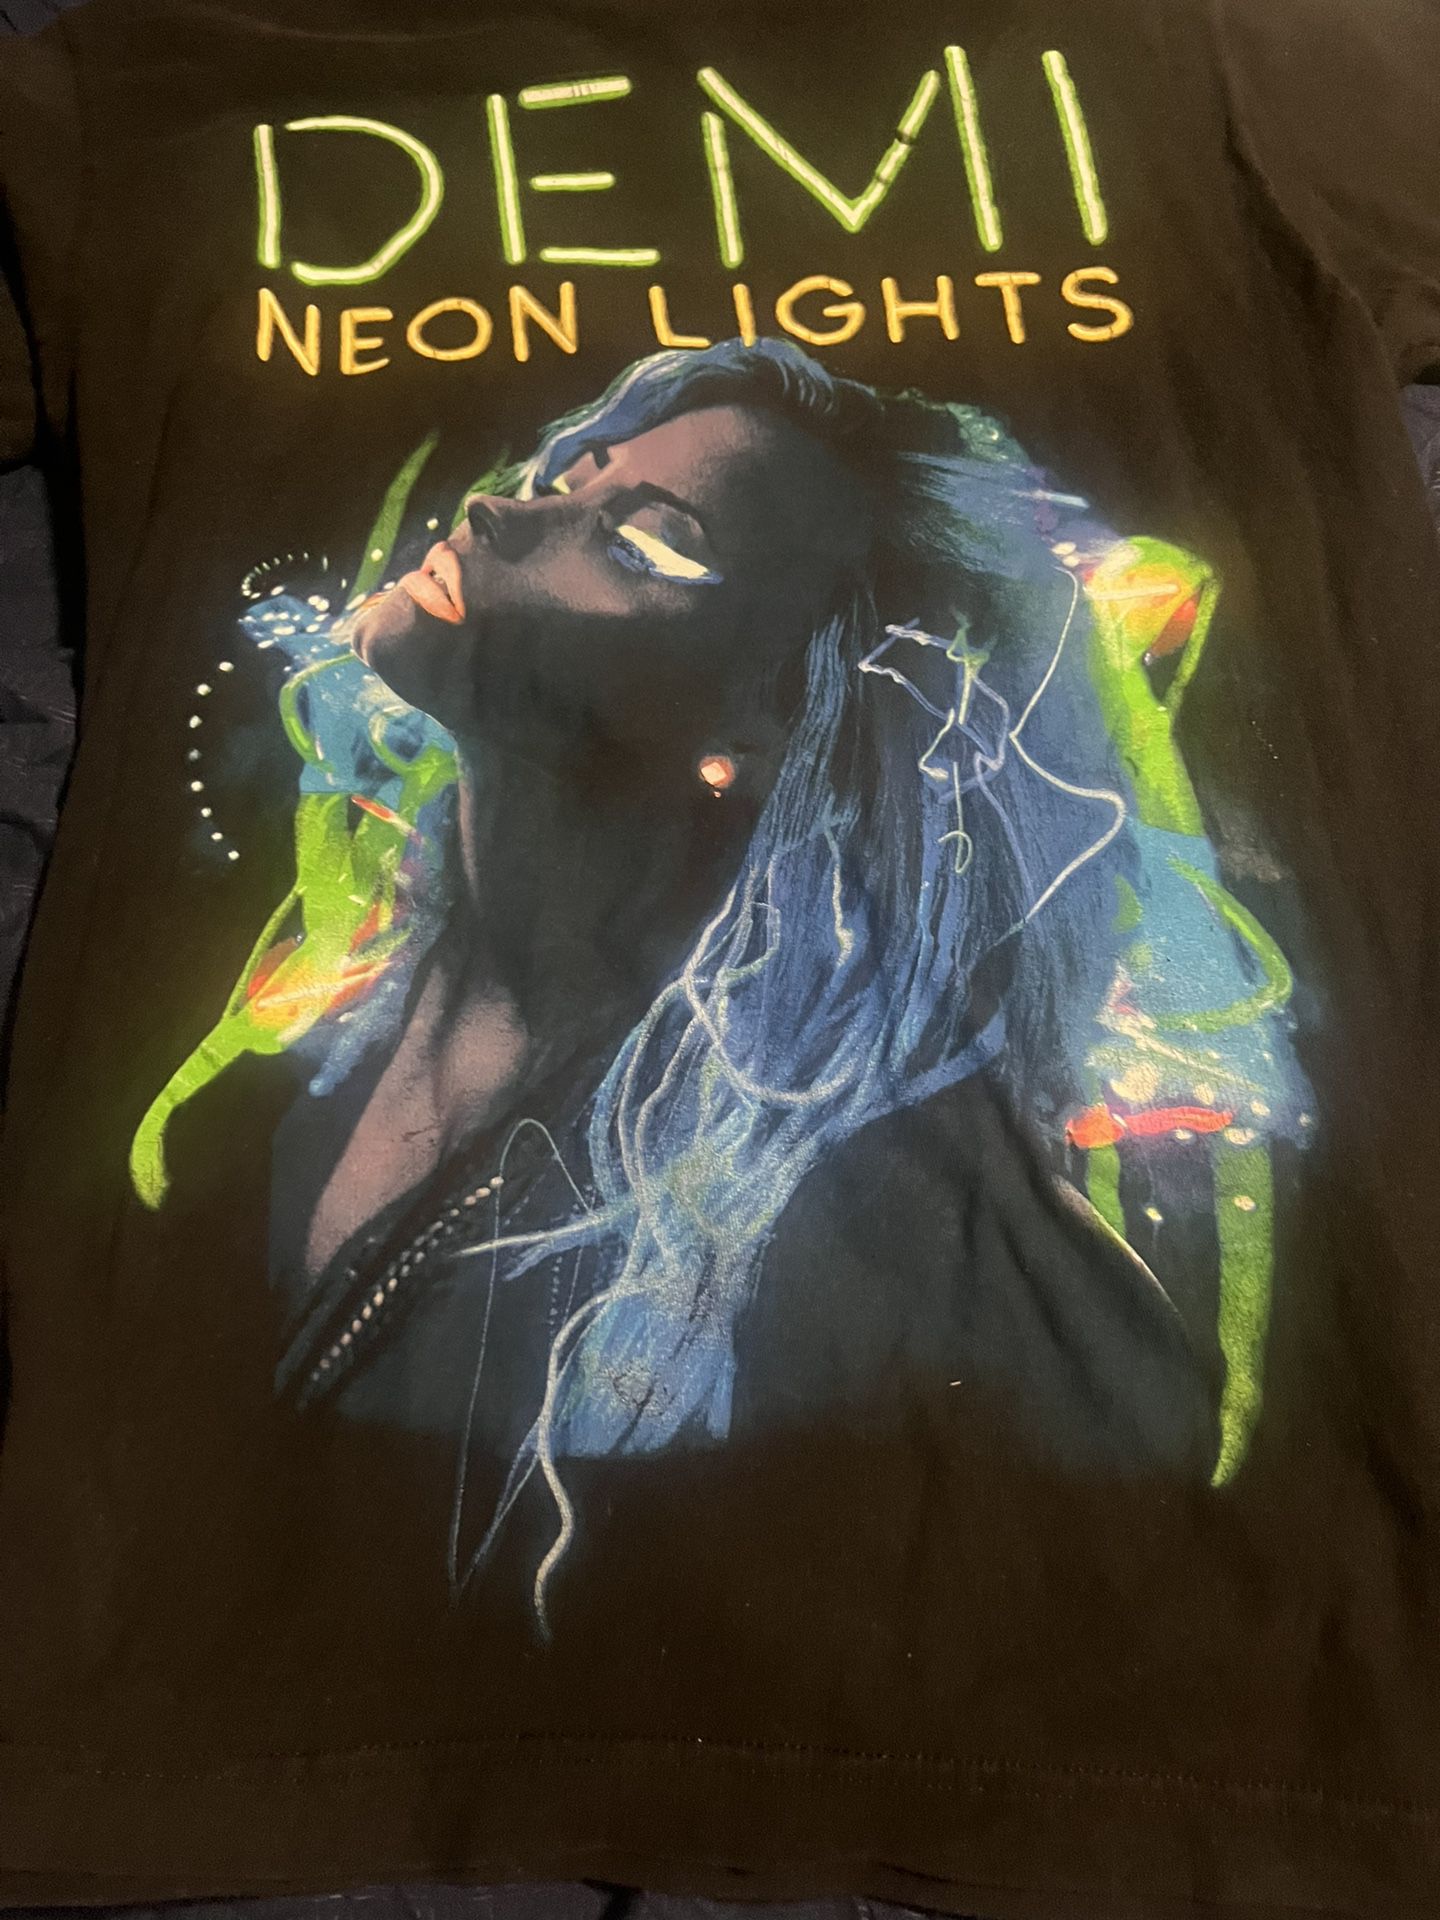 Demi Lovato Neon Lights Tour 2014 Medium Shirt Black Band Tour Dates On Back